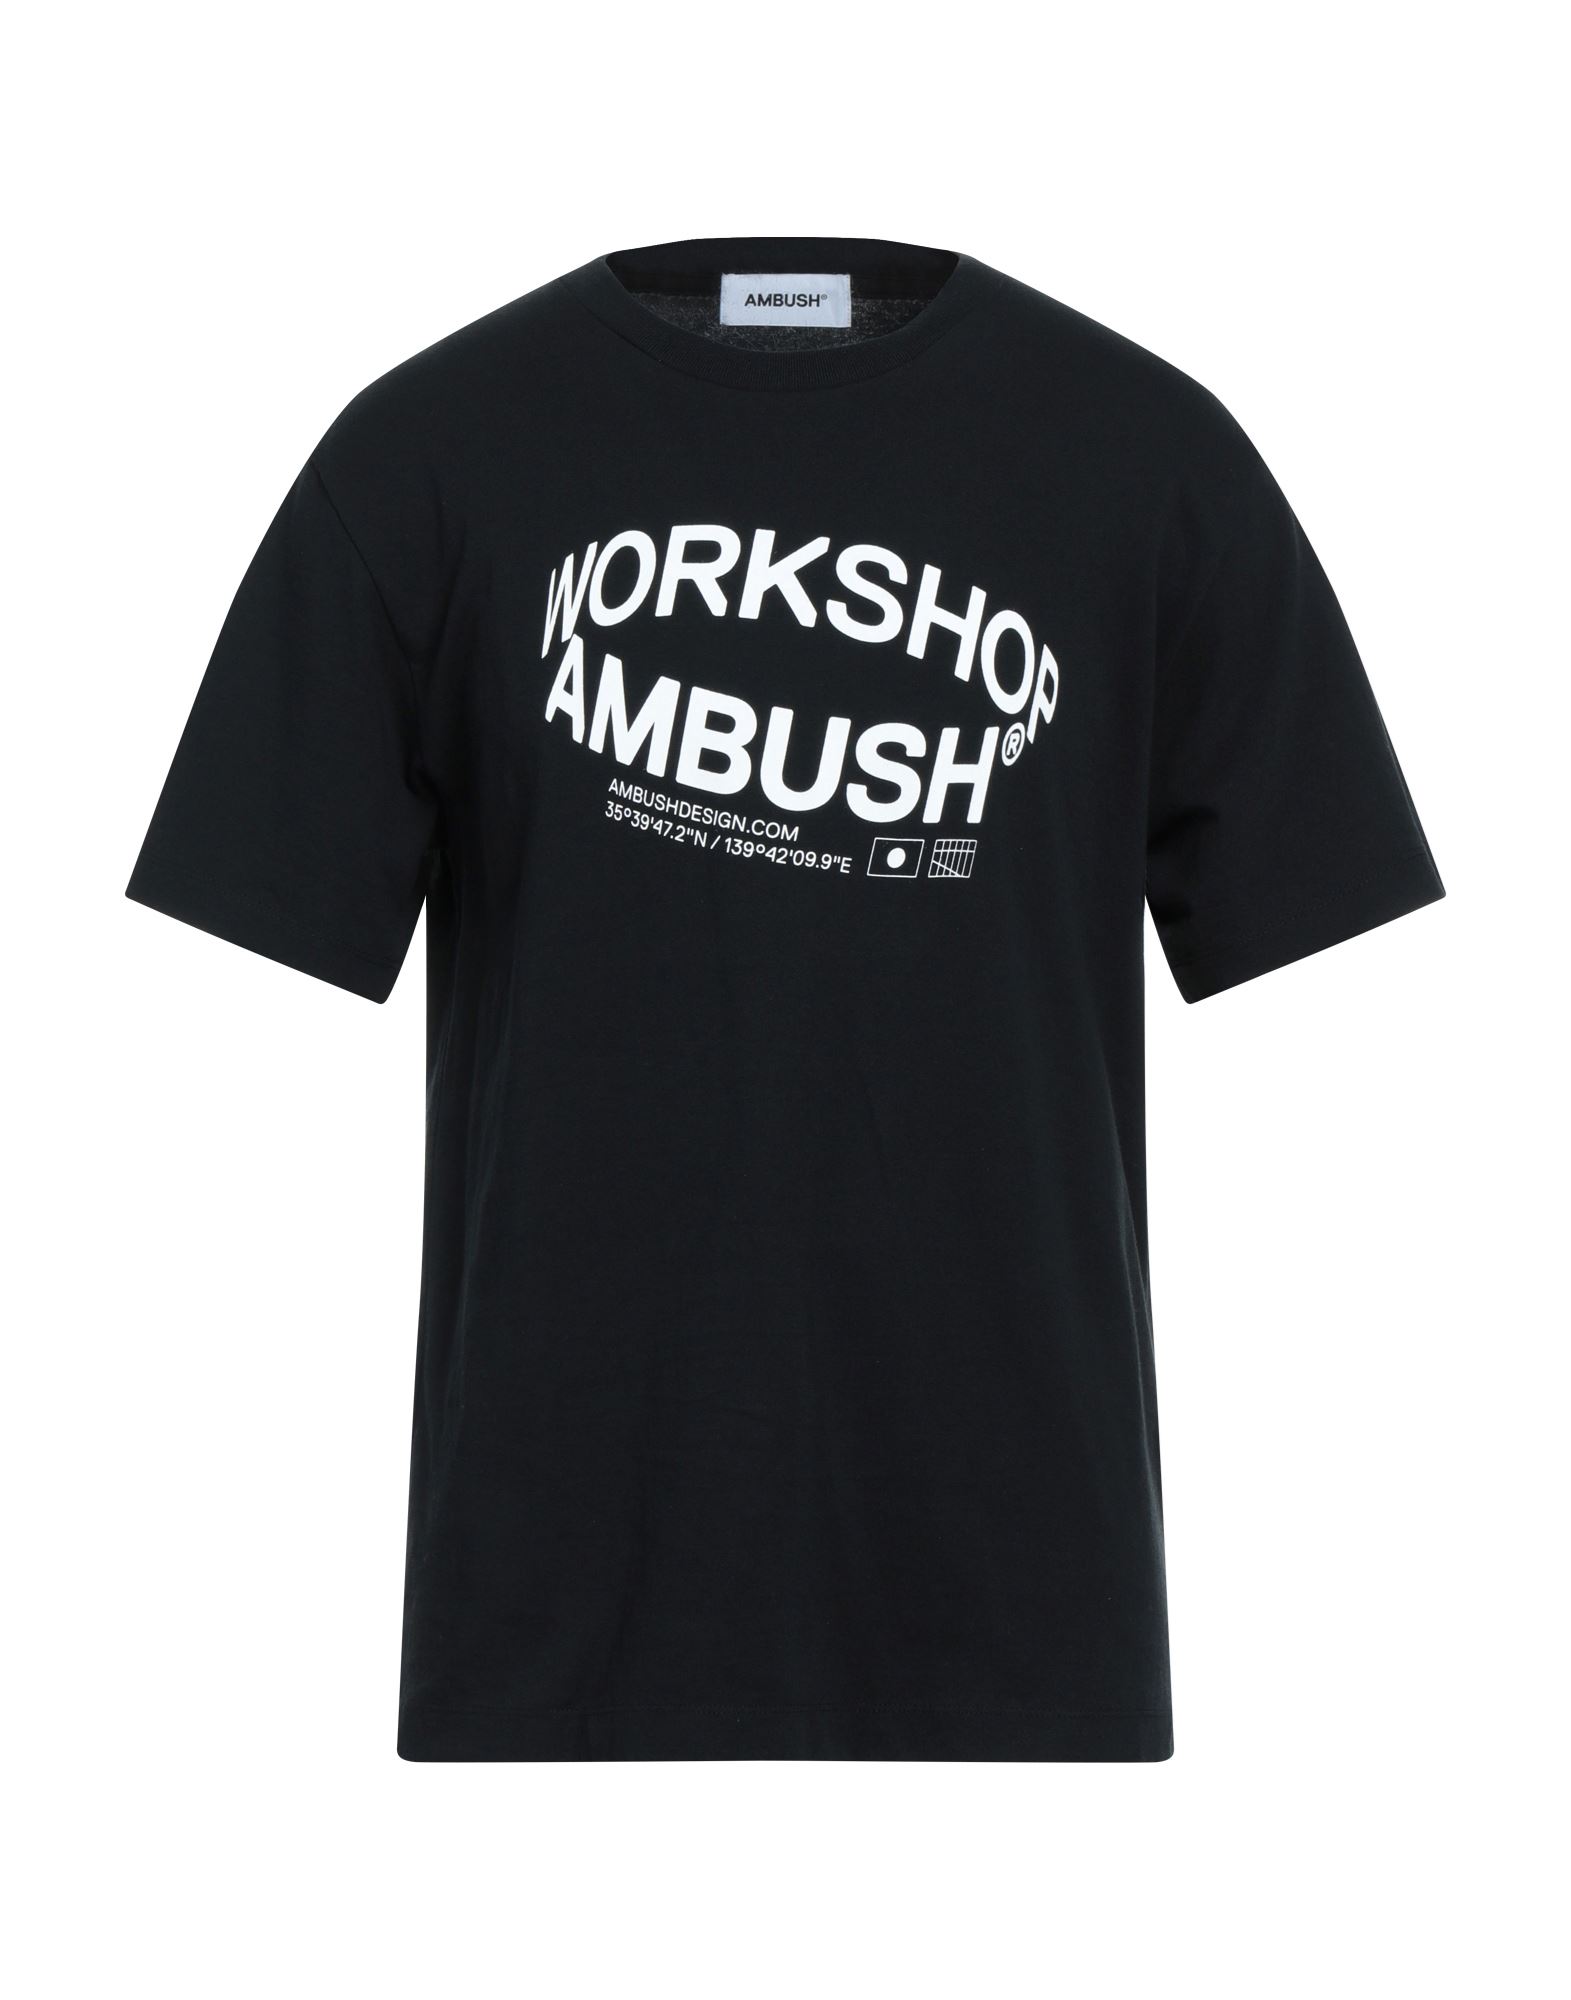 Ambush Man T-shirt Black Size Xxl Cotton